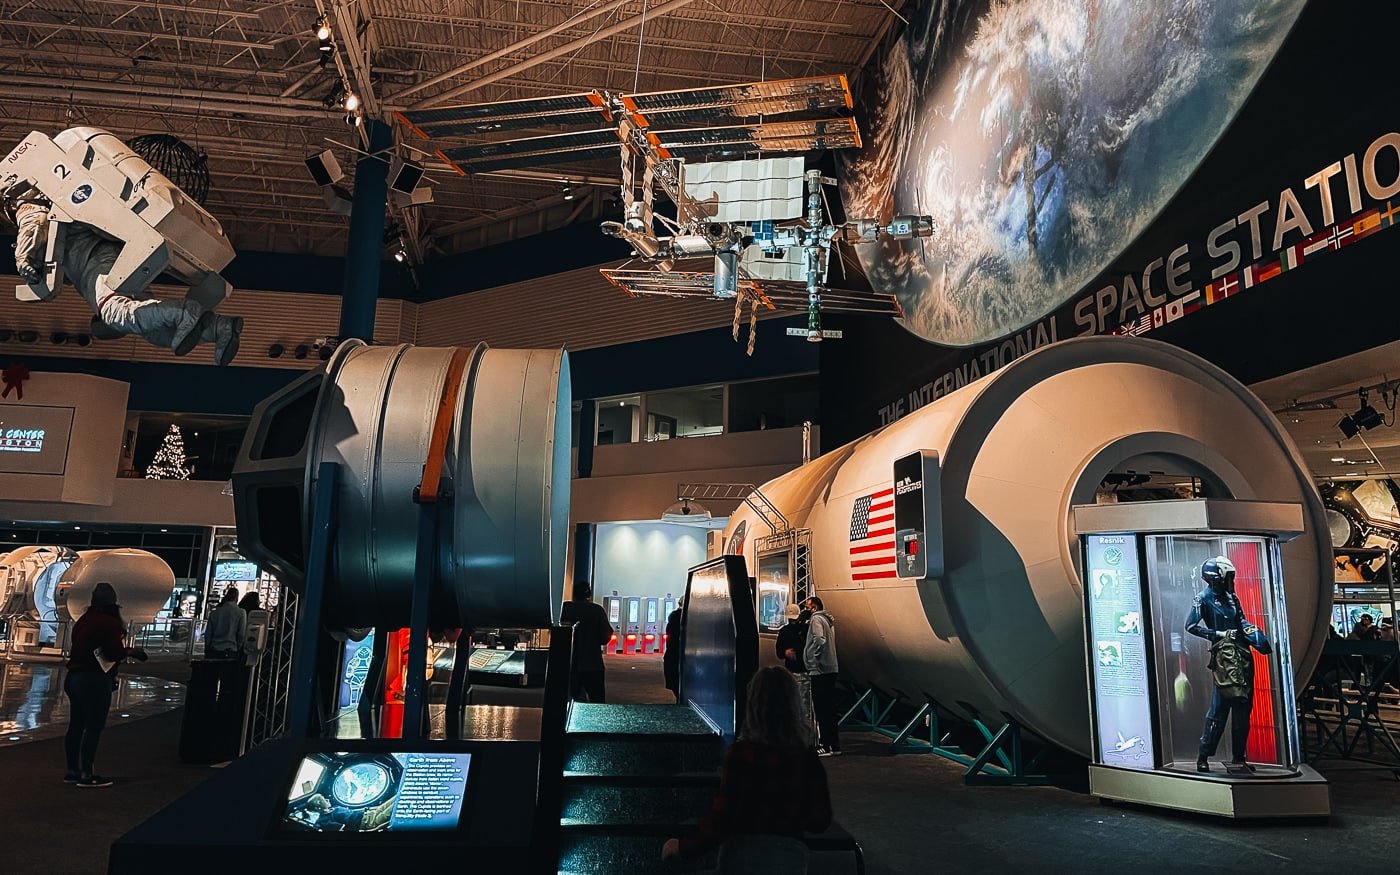 NASA Space Center in Houston TX